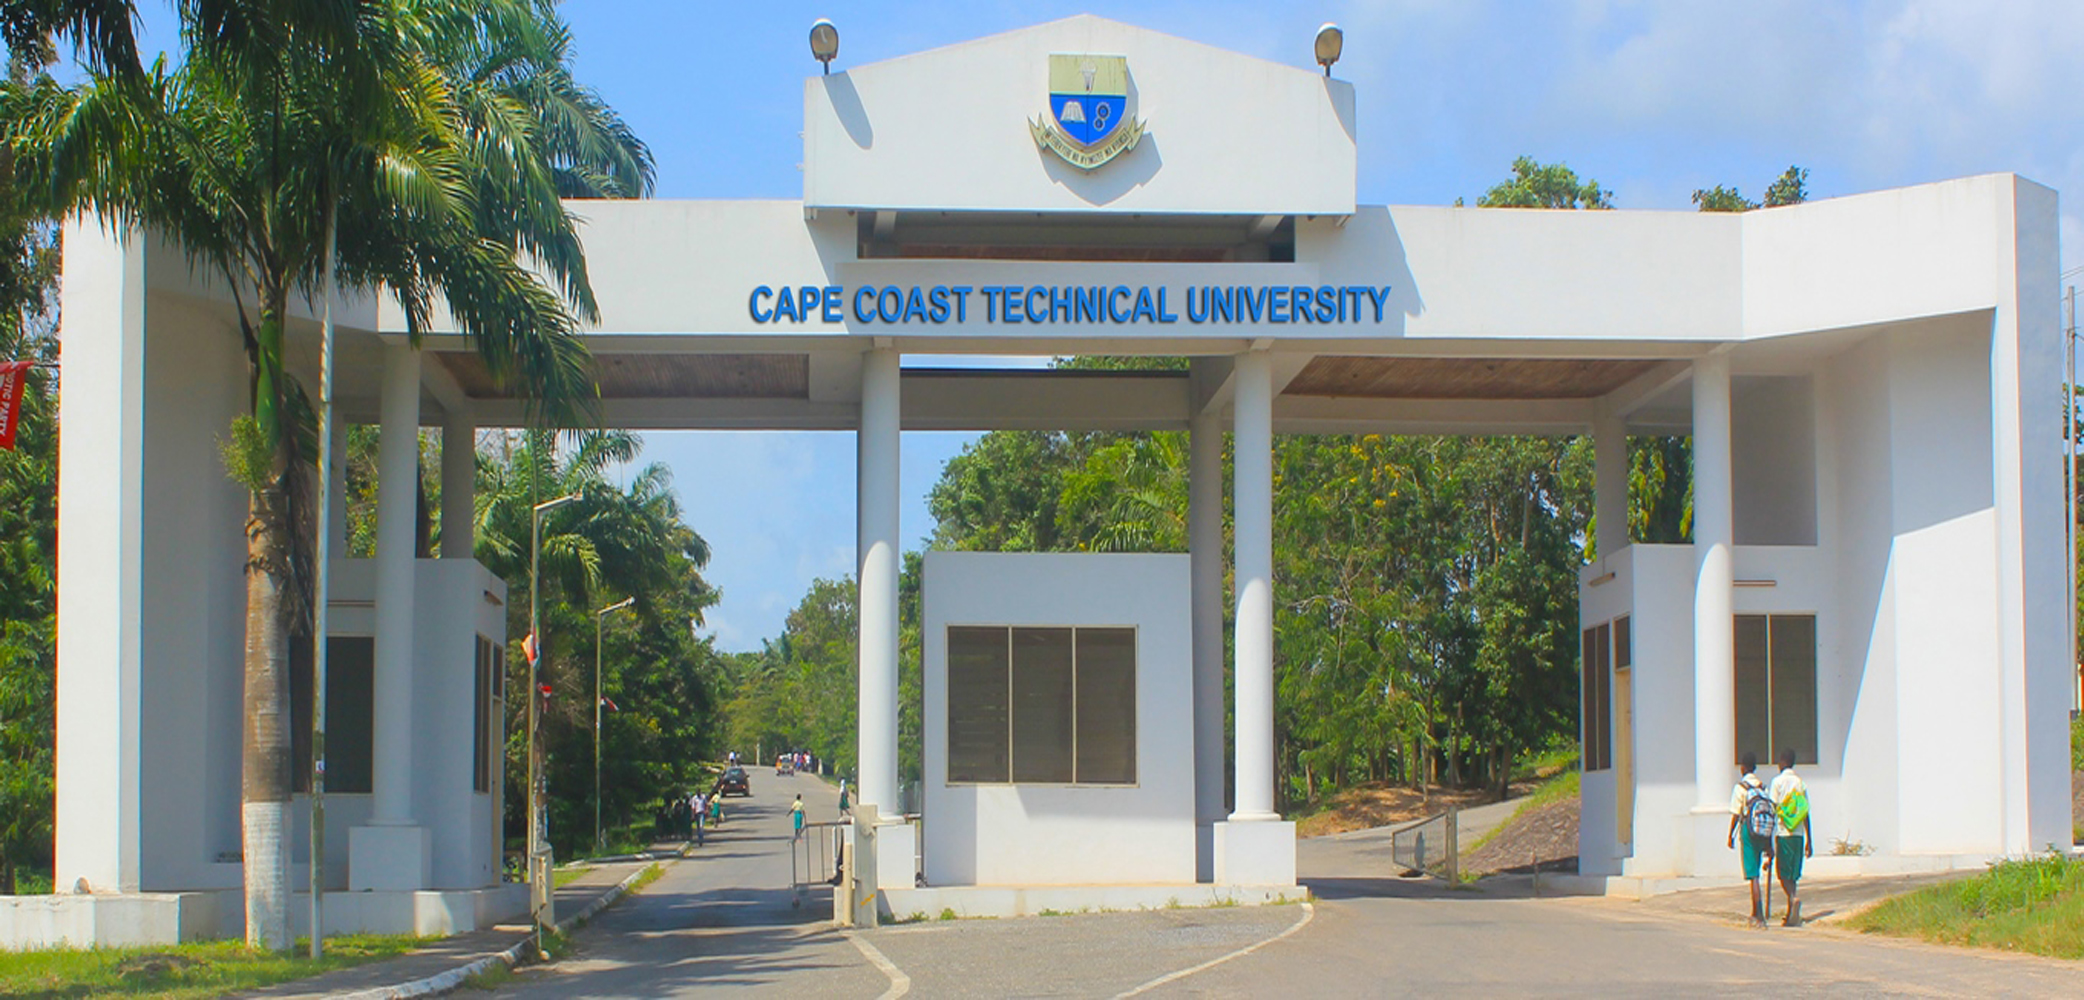 The entrance of the cape coast technical university